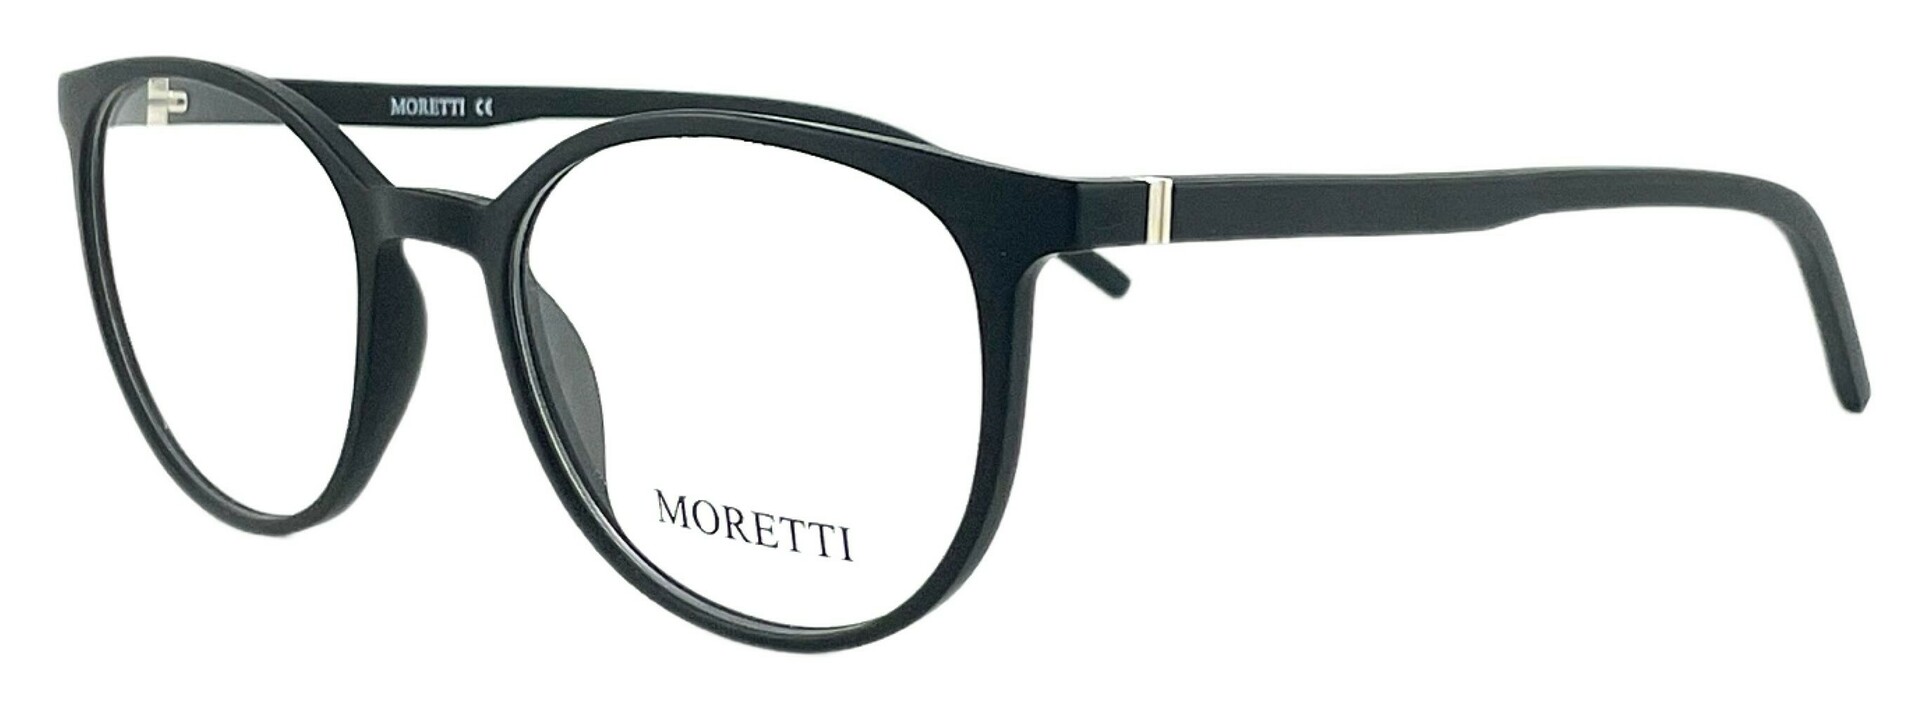 Moretti MZ10-17 C.01 2